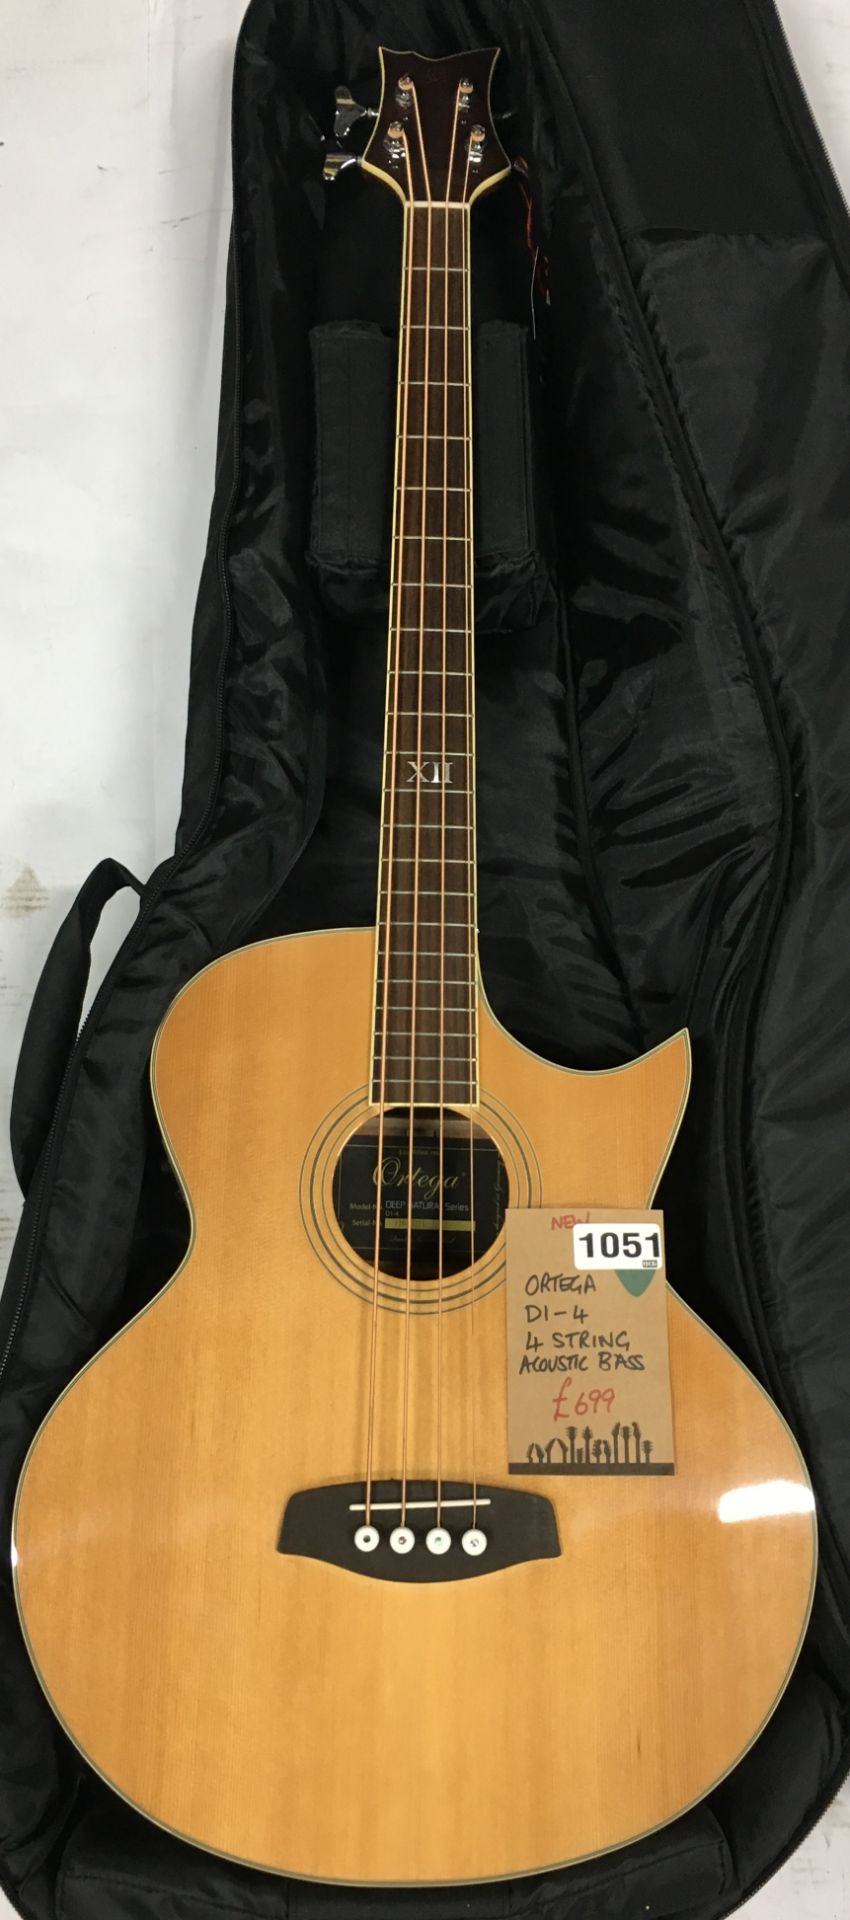 Ortega DI-4 4 String Acoustic Bass Guitar | New | In Case | RRP £699 - Image 2 of 4